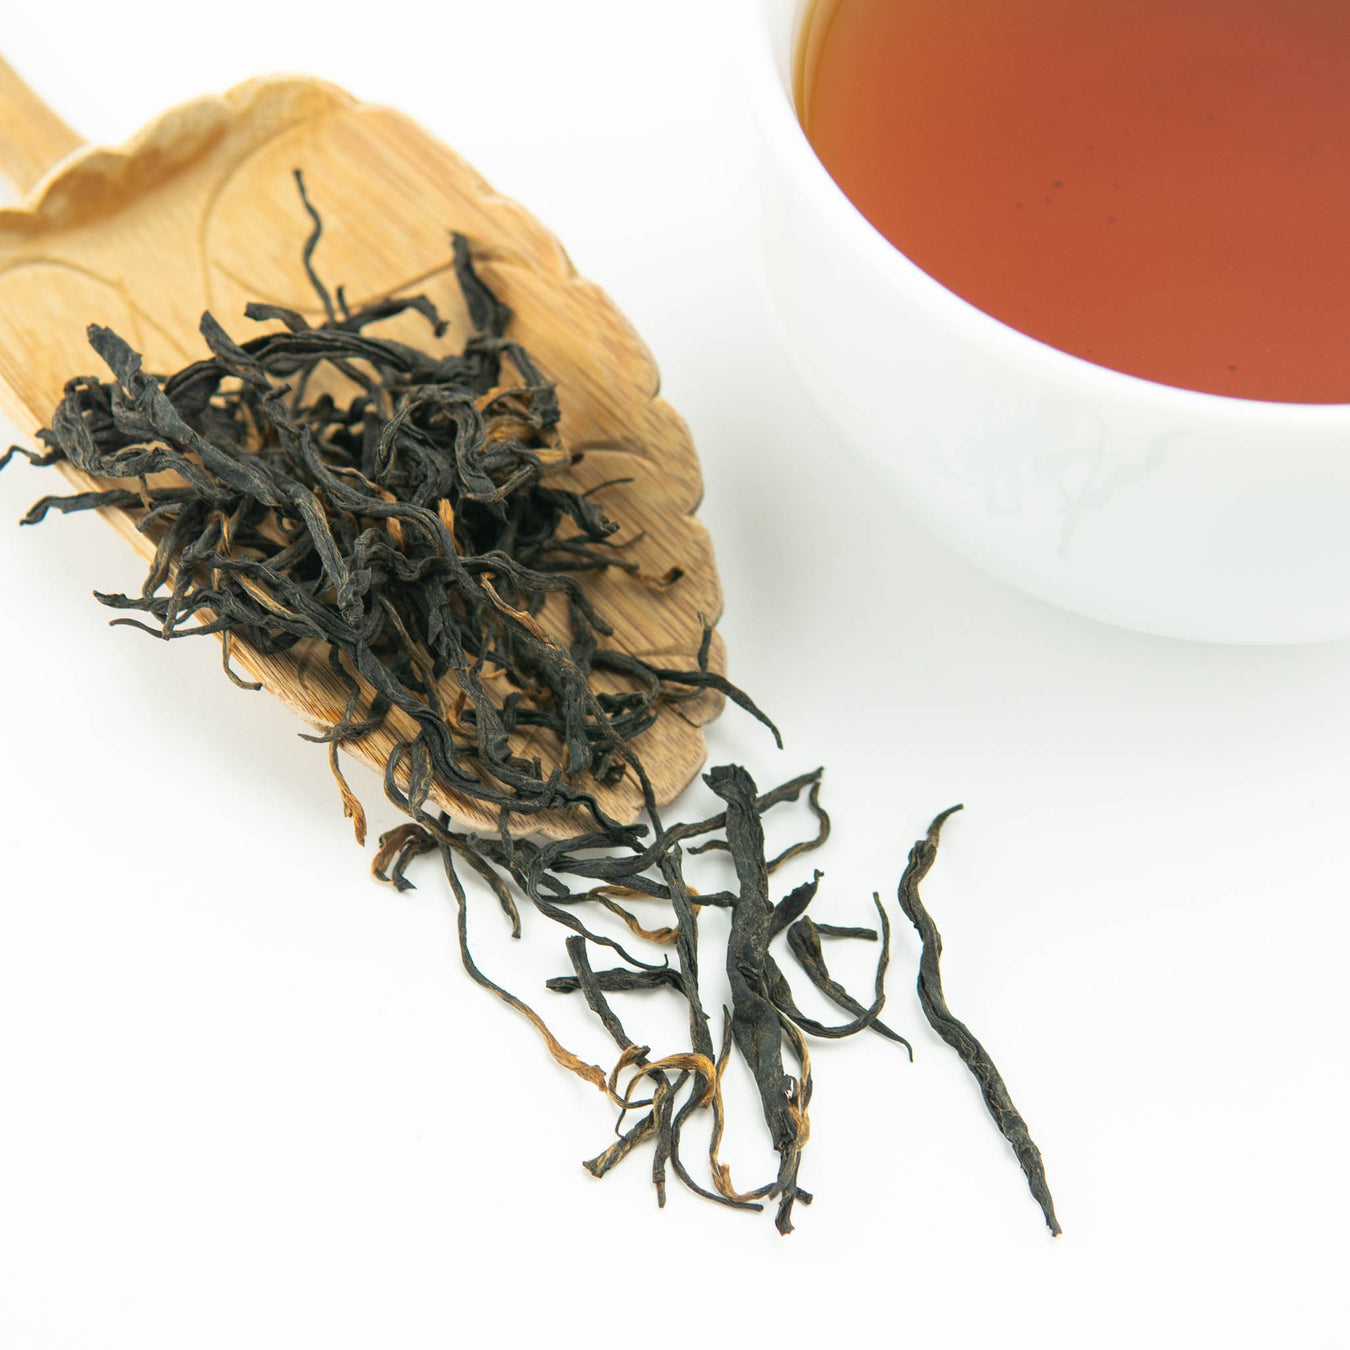 Nepalese Black Tea